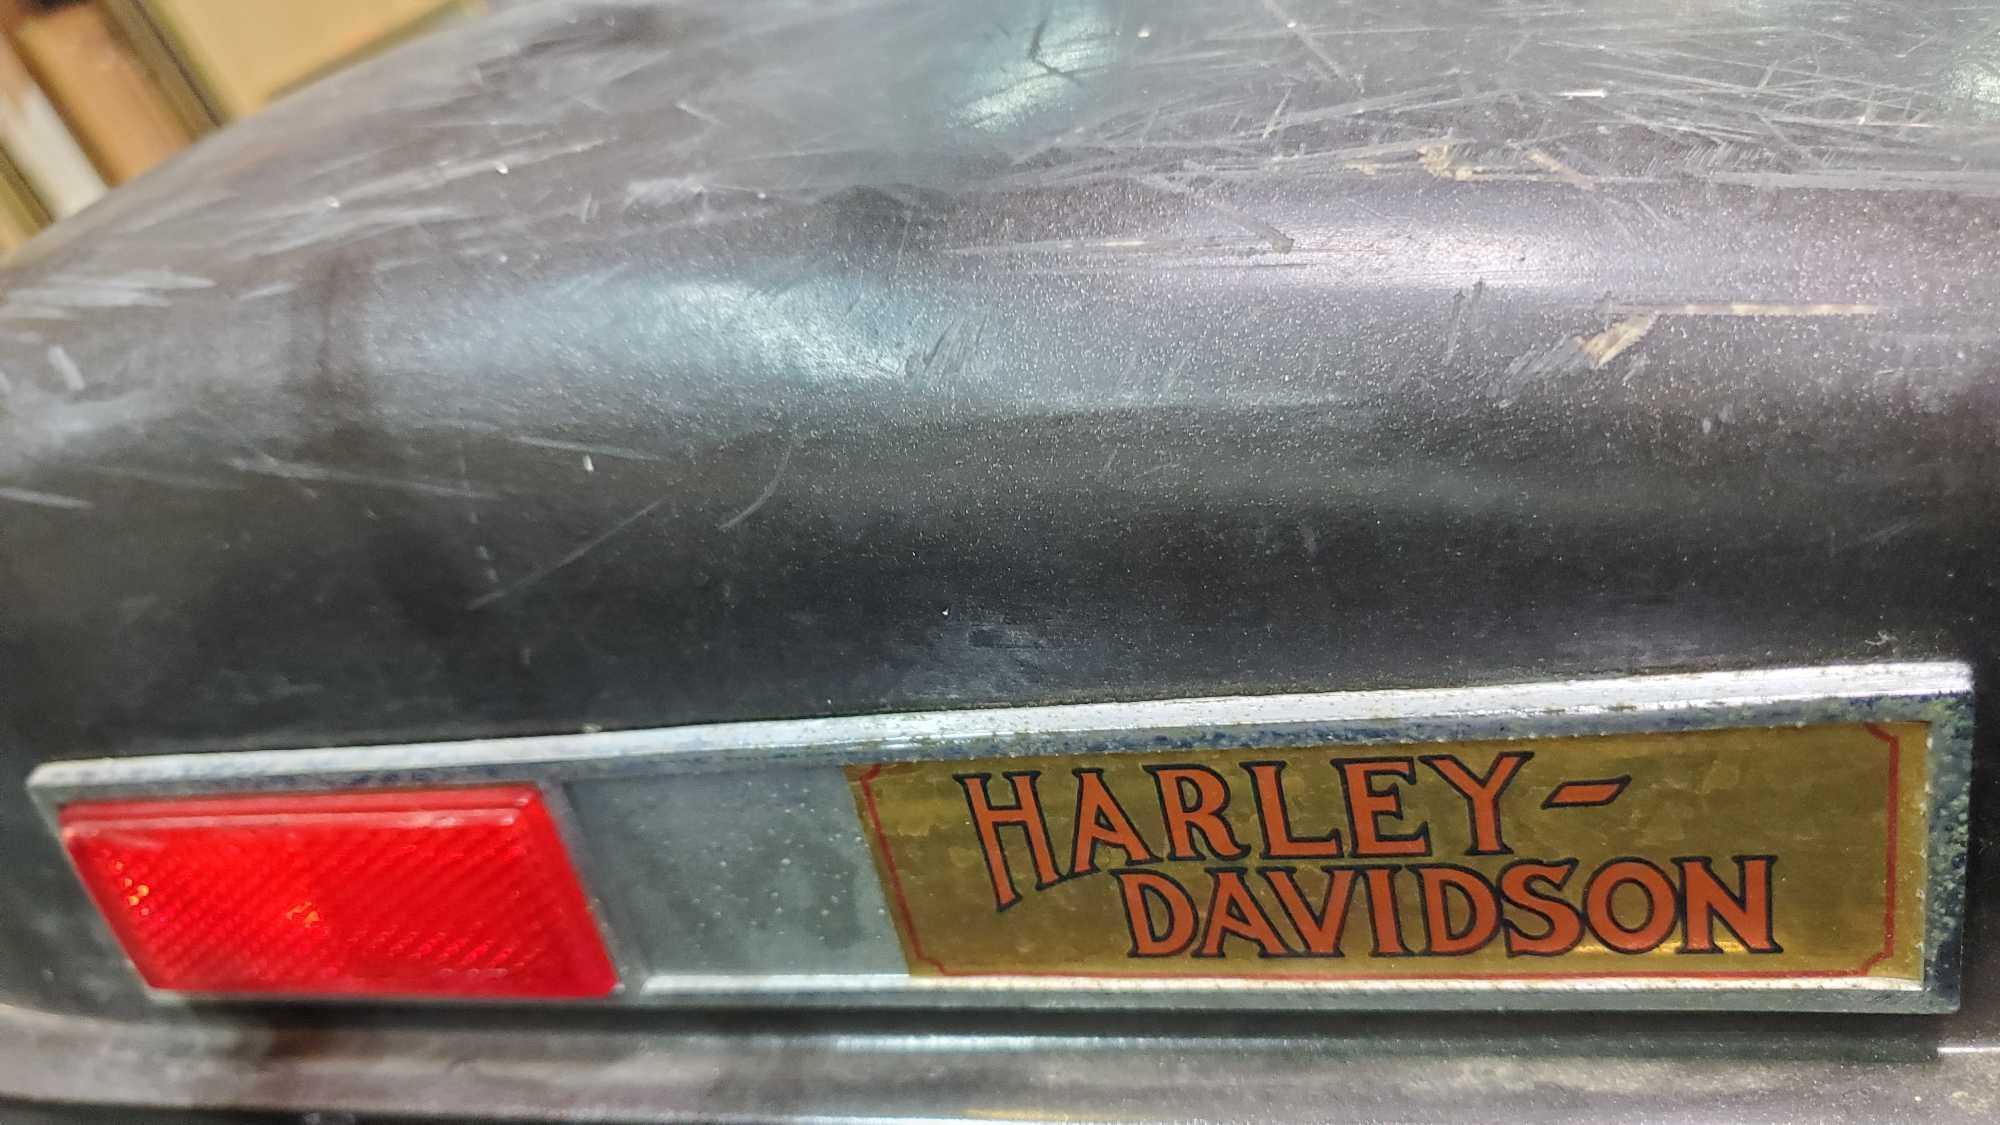 Lot of 2 sets of Harley Davidson motorcycle saddle bags 4 total